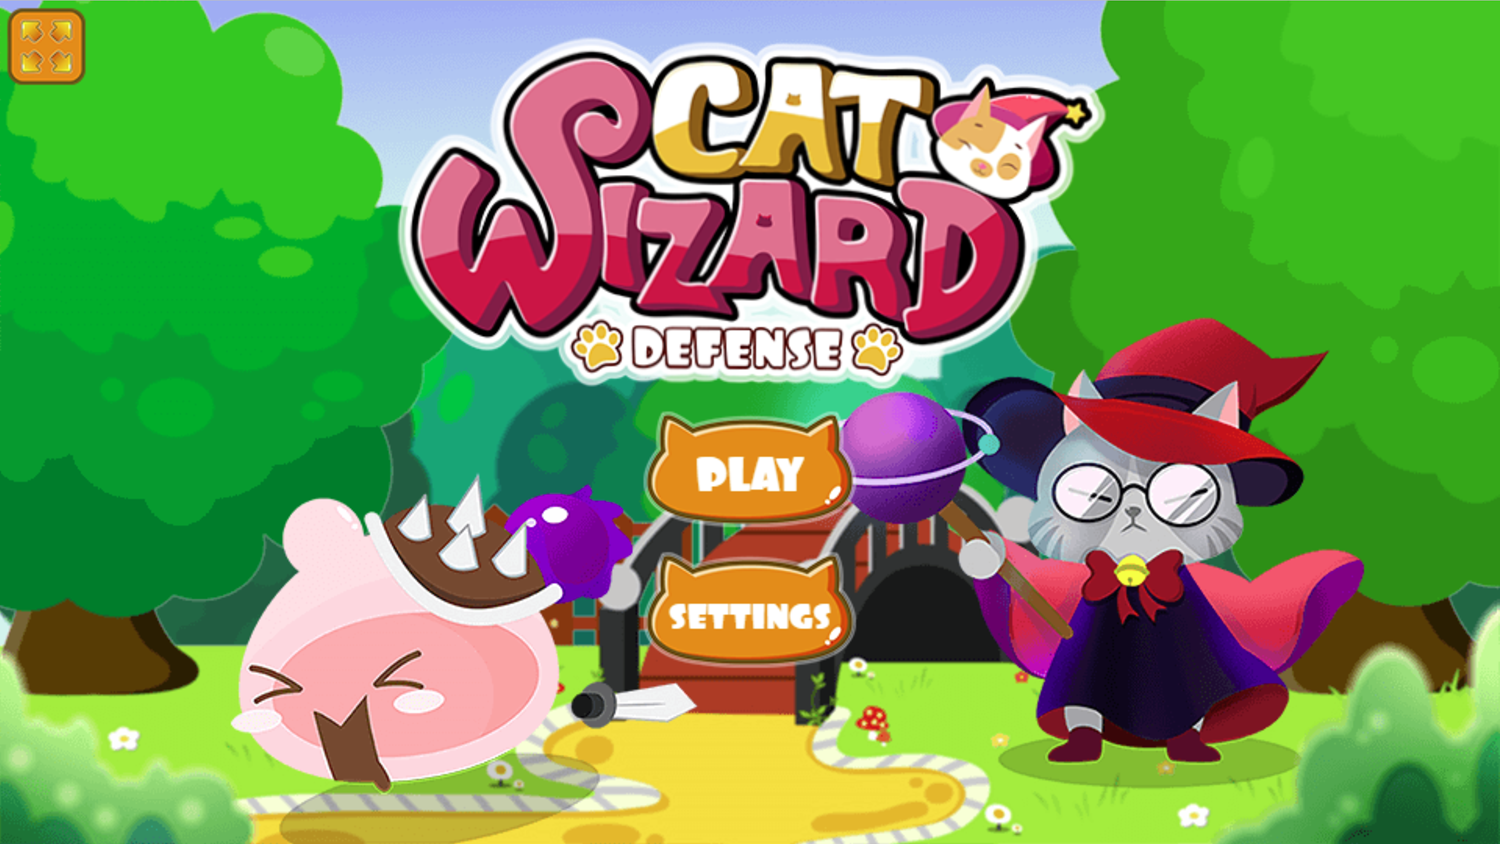 Cat Wizard Defense Game Welcome Screen Screenshot.